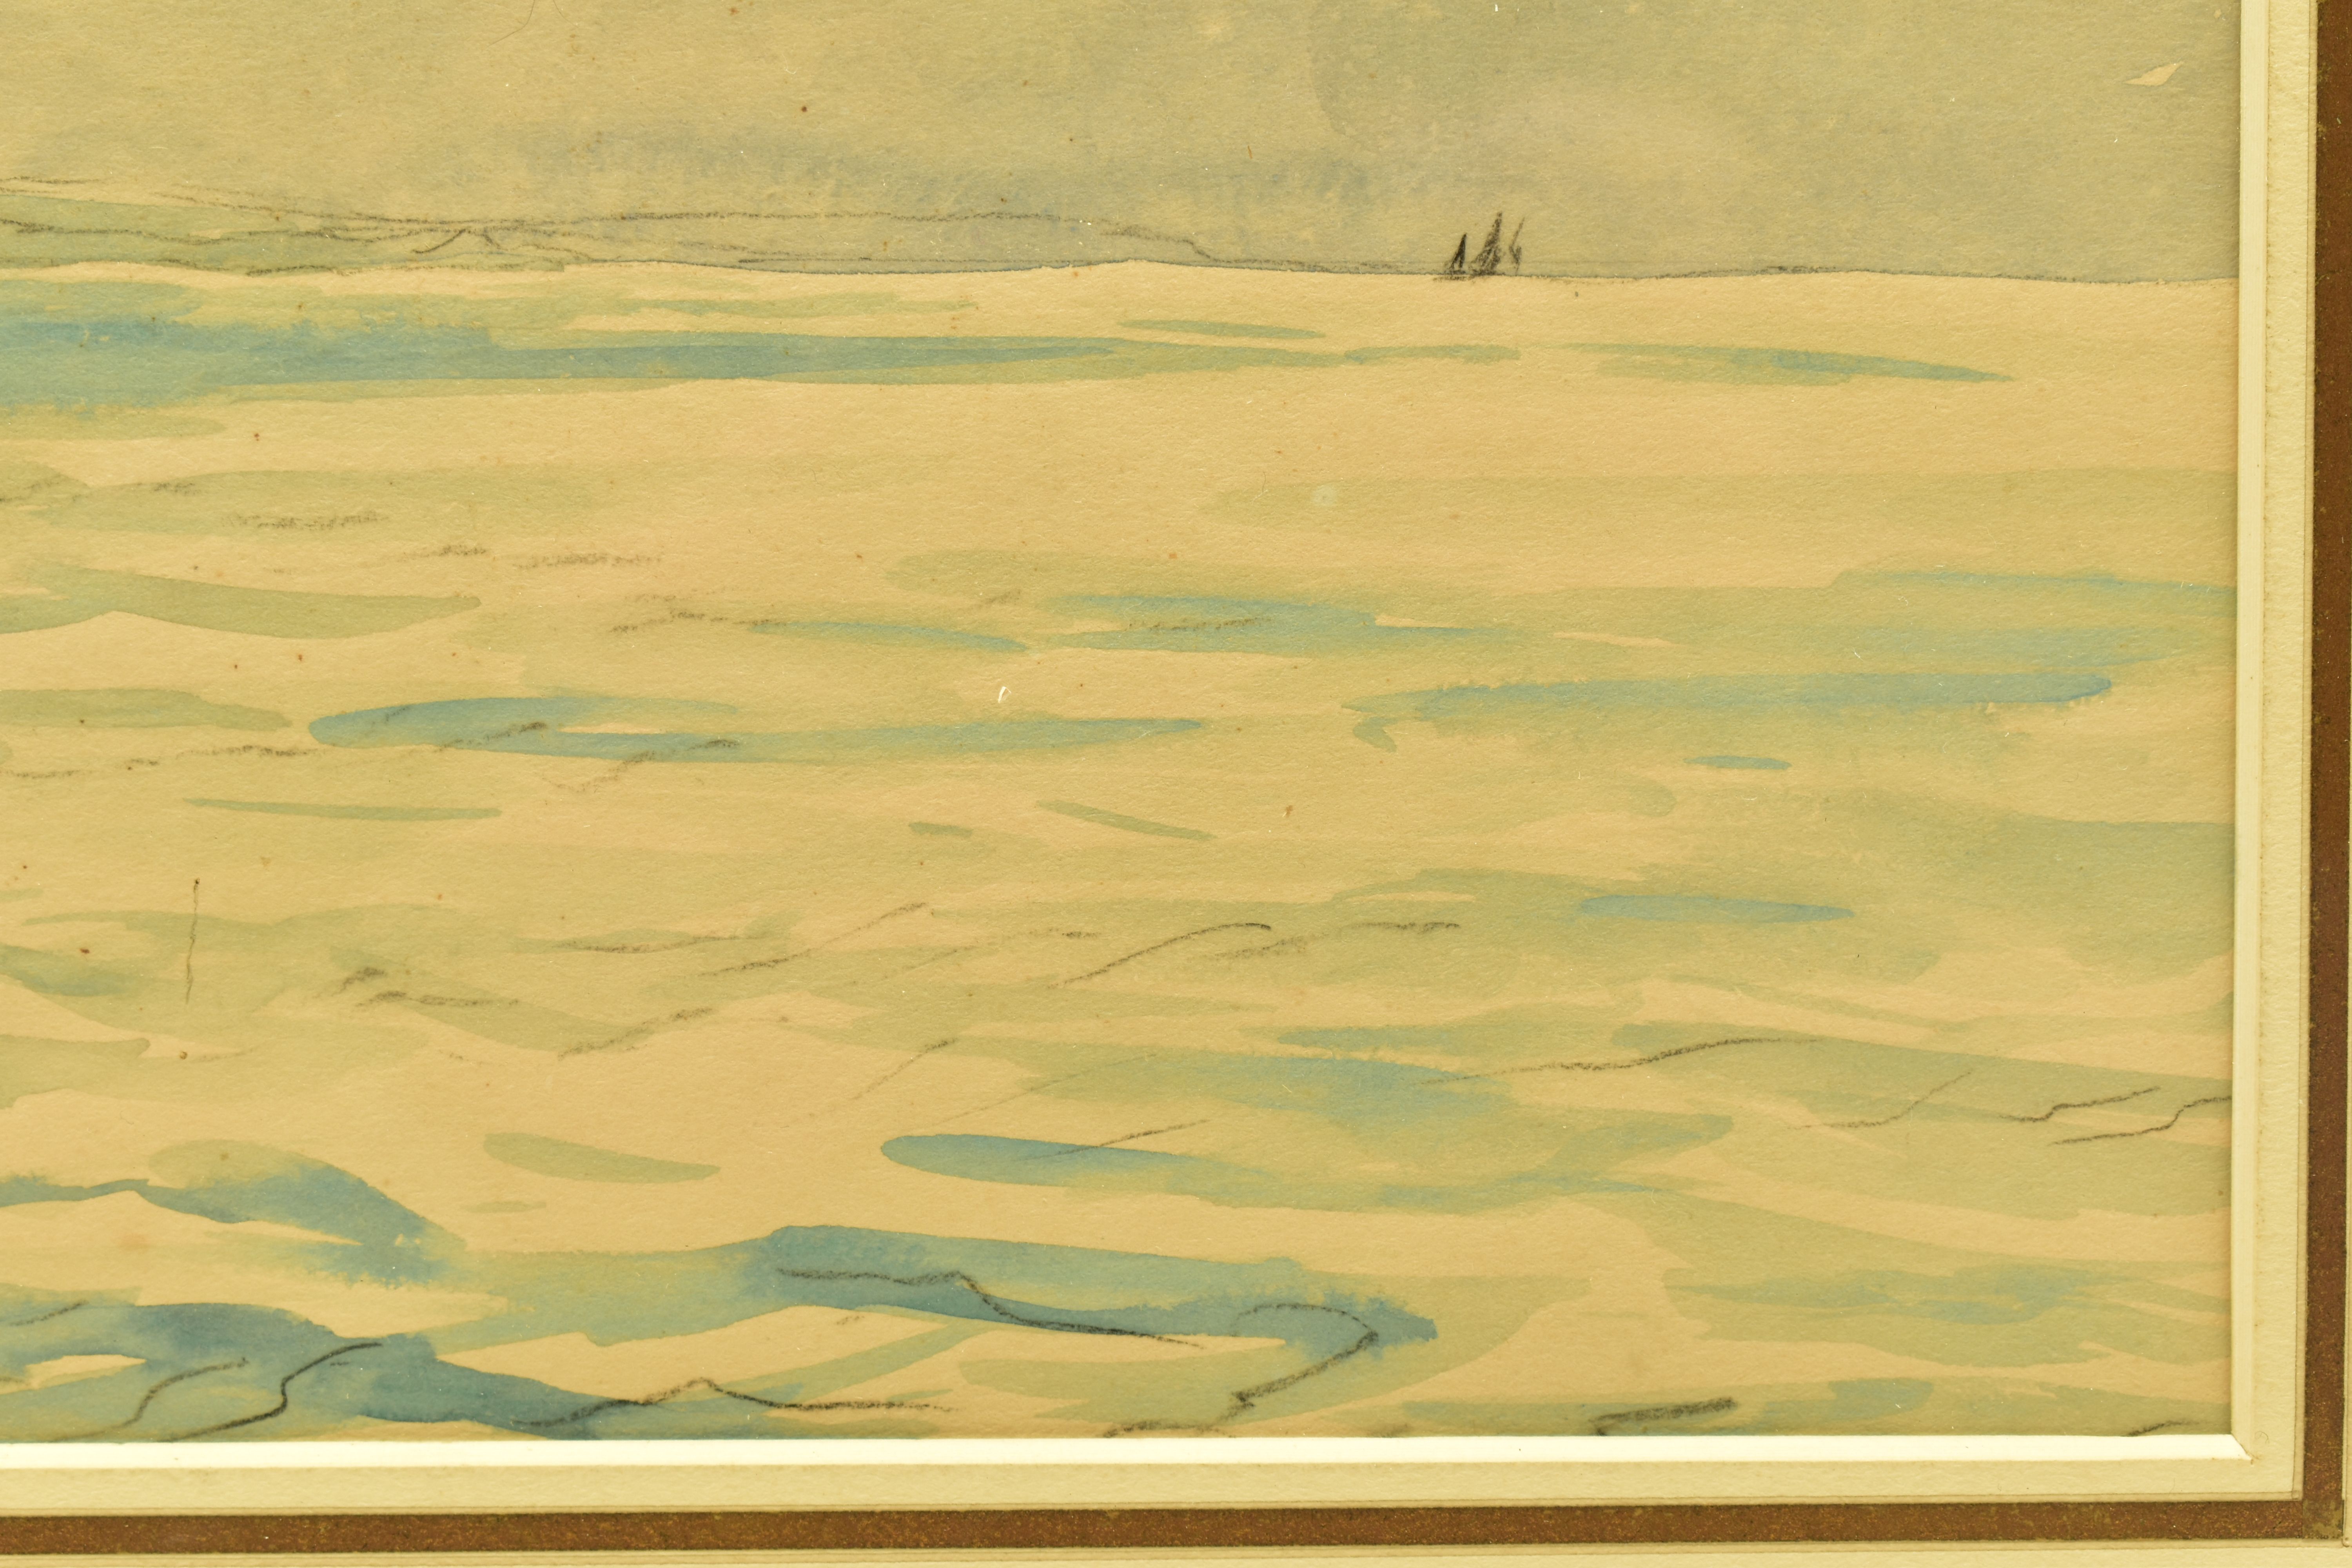 DAVID MUIRHEAD BONE (1876-1953) 'SPANISH COAST', a view to a distant coastline across open seas, - Image 5 of 8